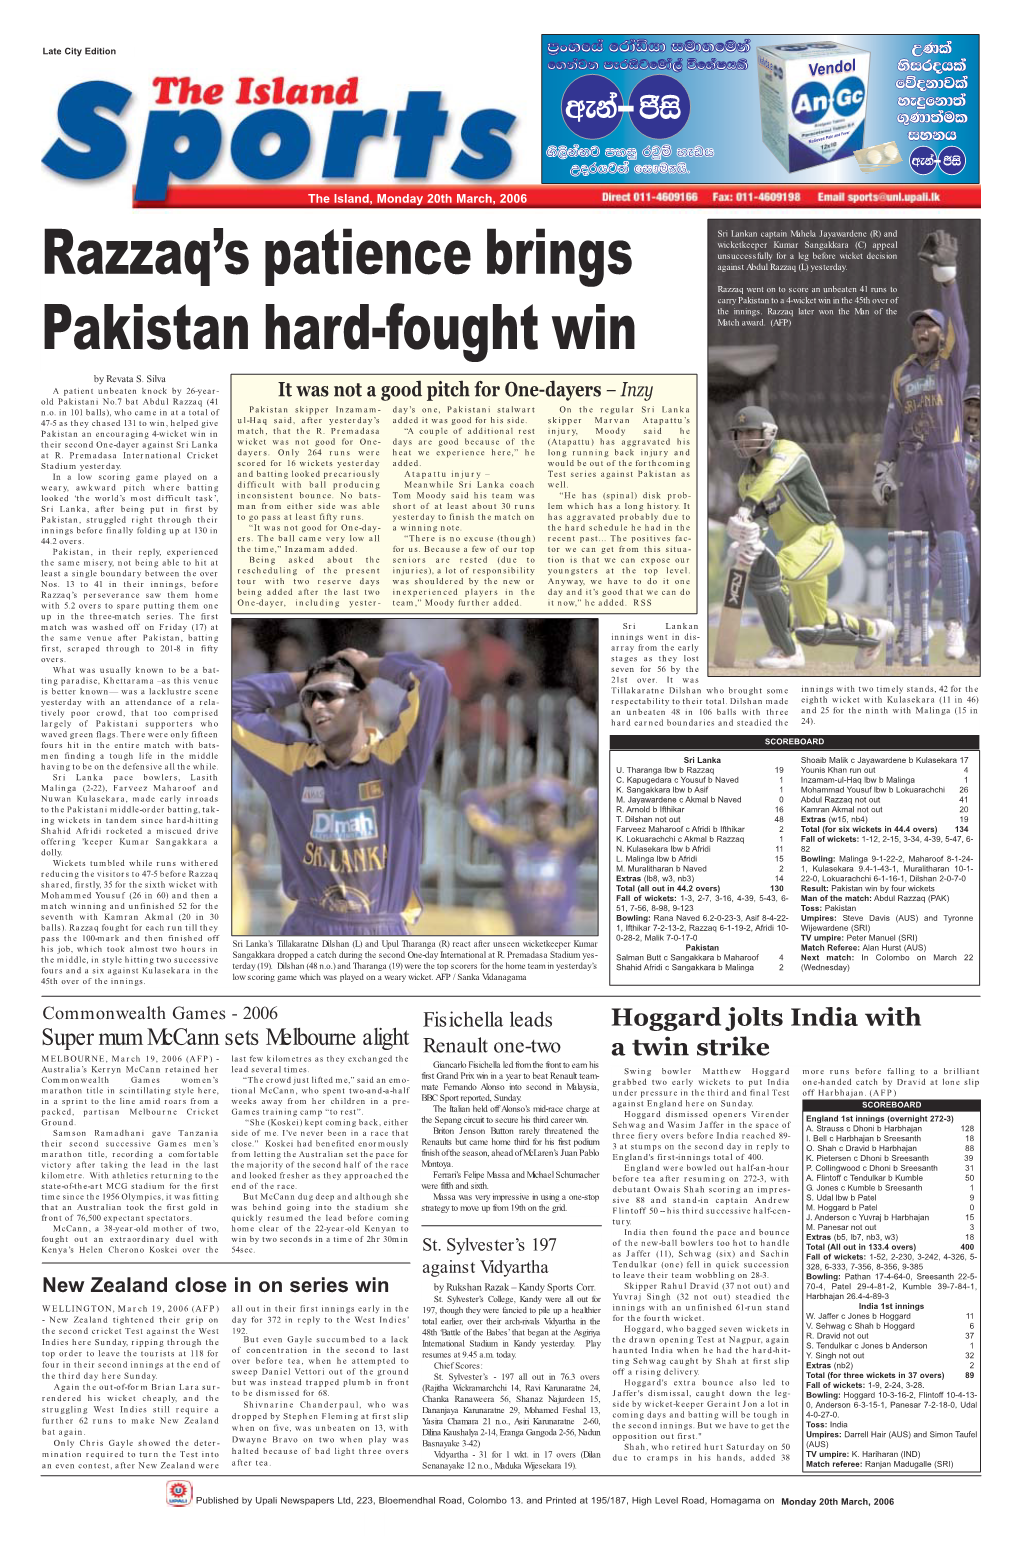 Razzaq's Patience Brings Pakistan Hard-Fought